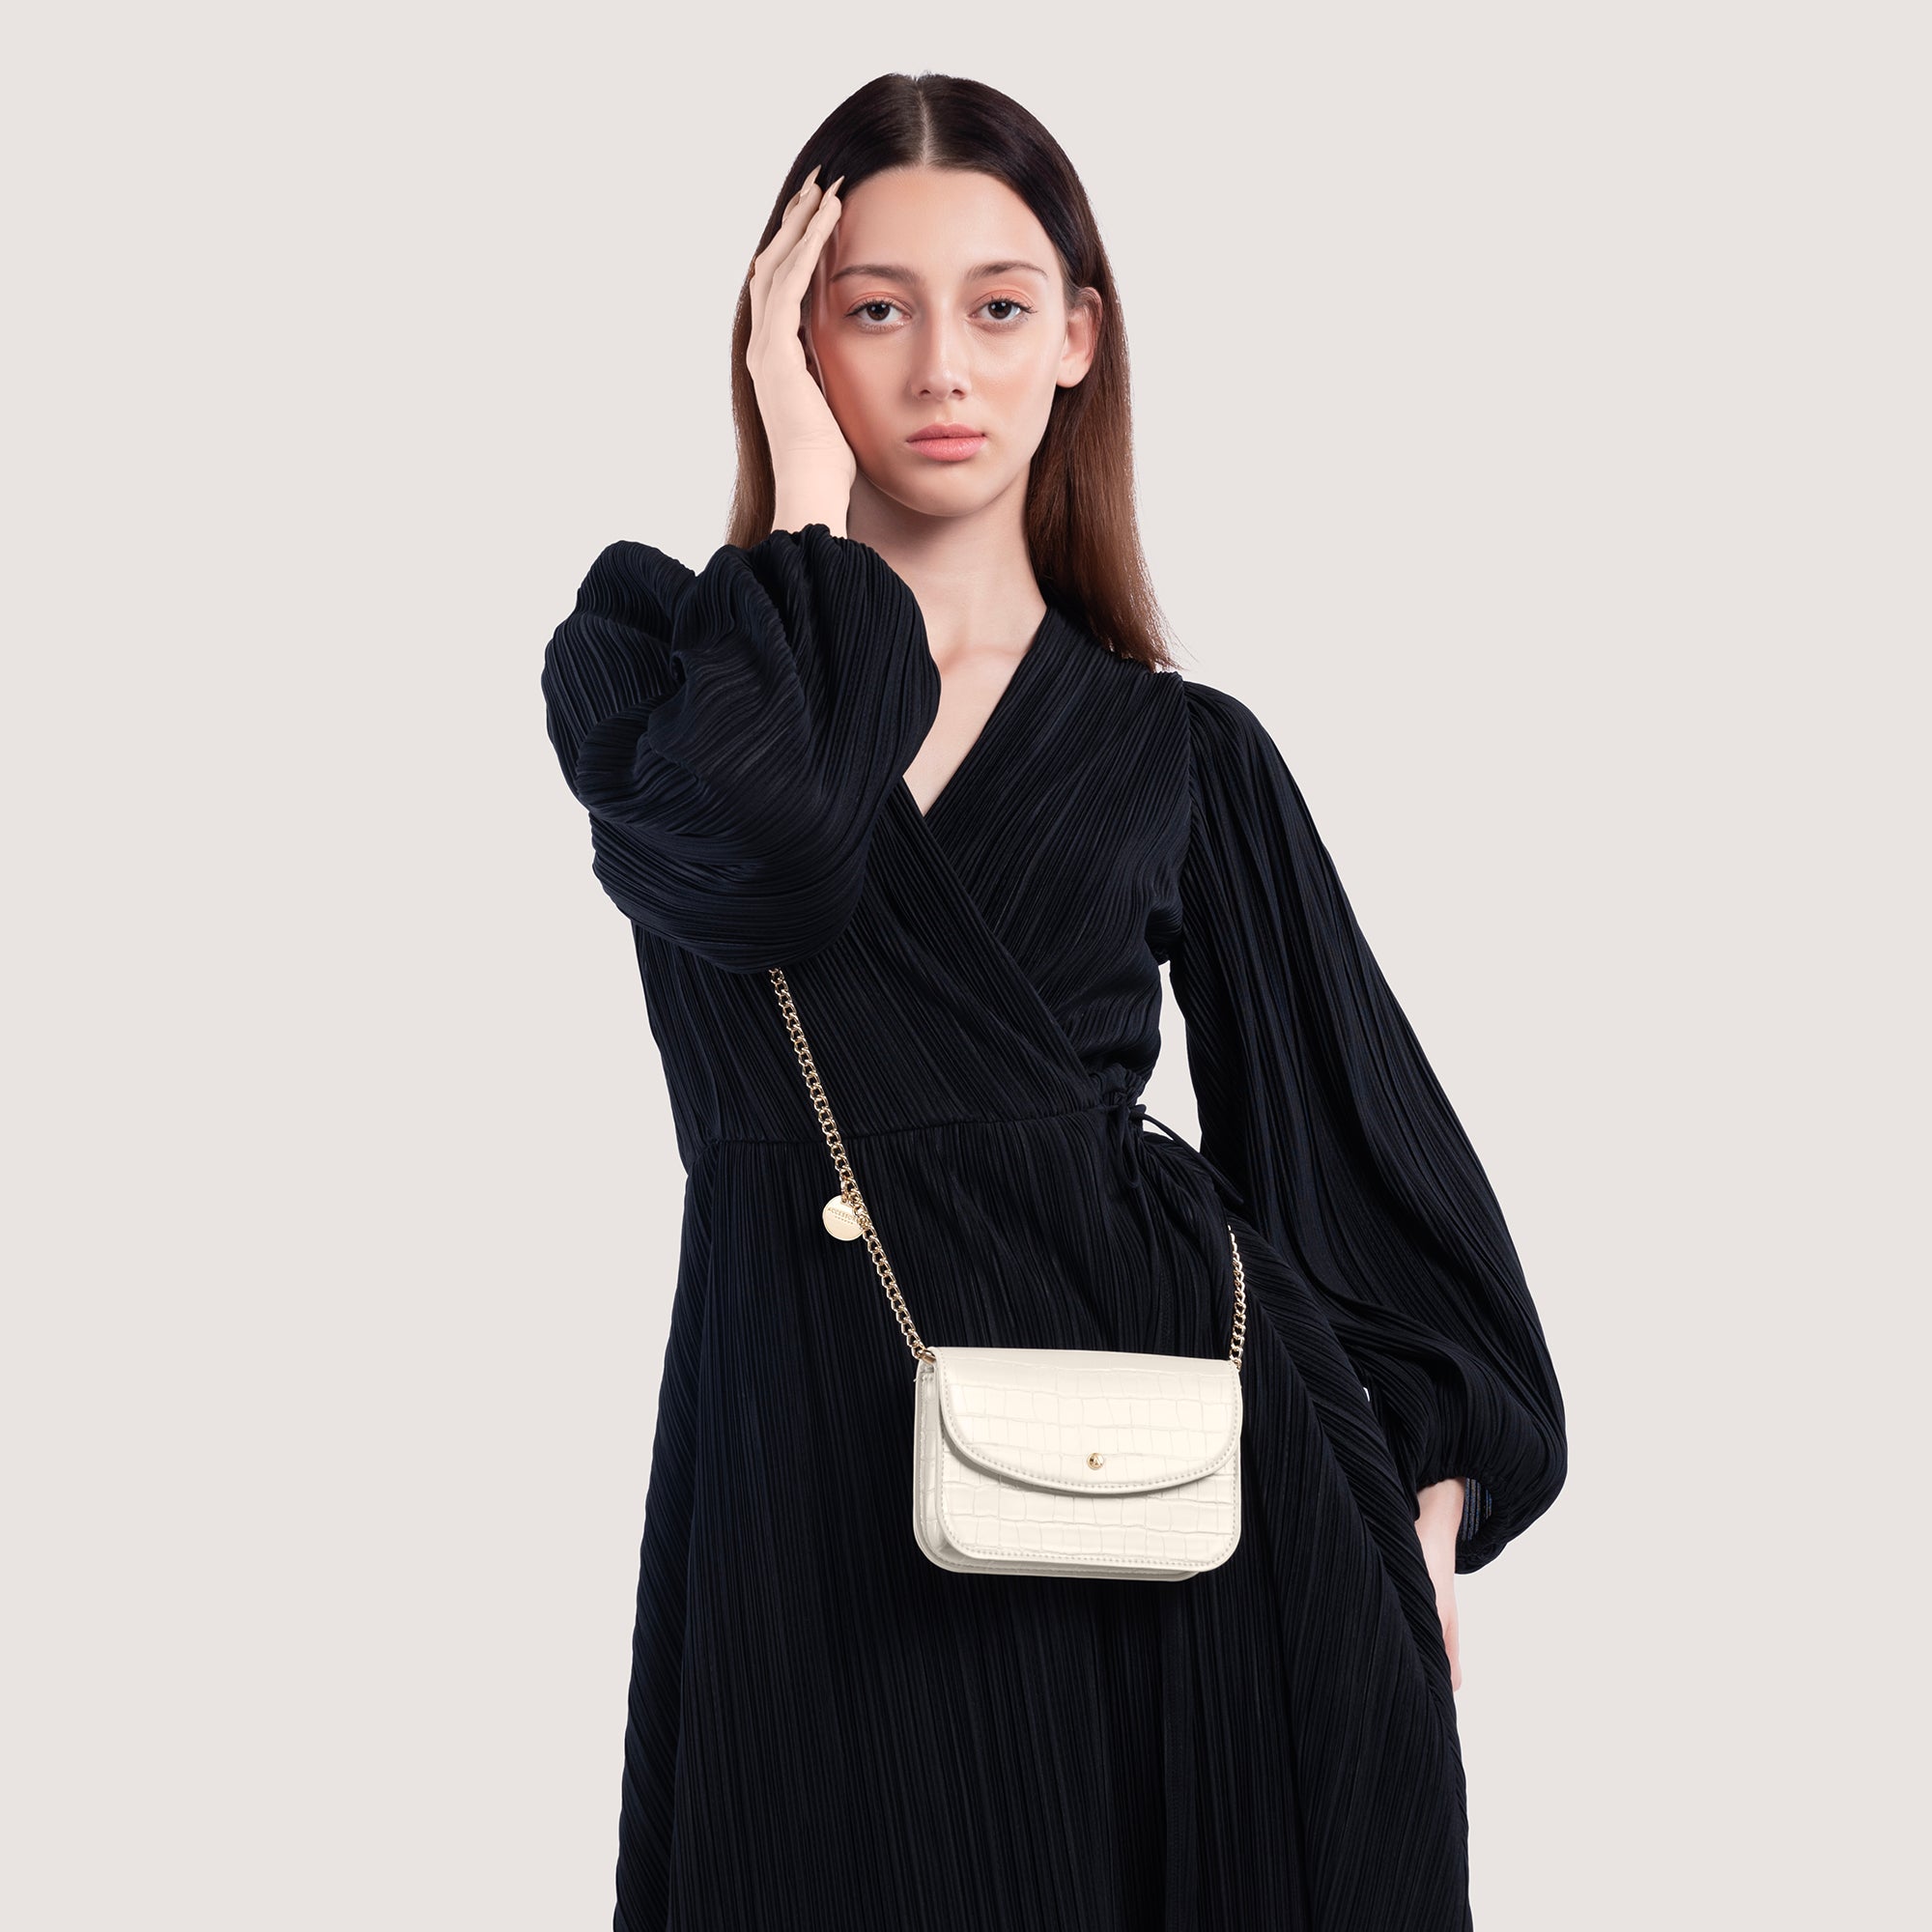 Accessorize London Women's Faux Leather Ivory Mini Purse Sling Bag